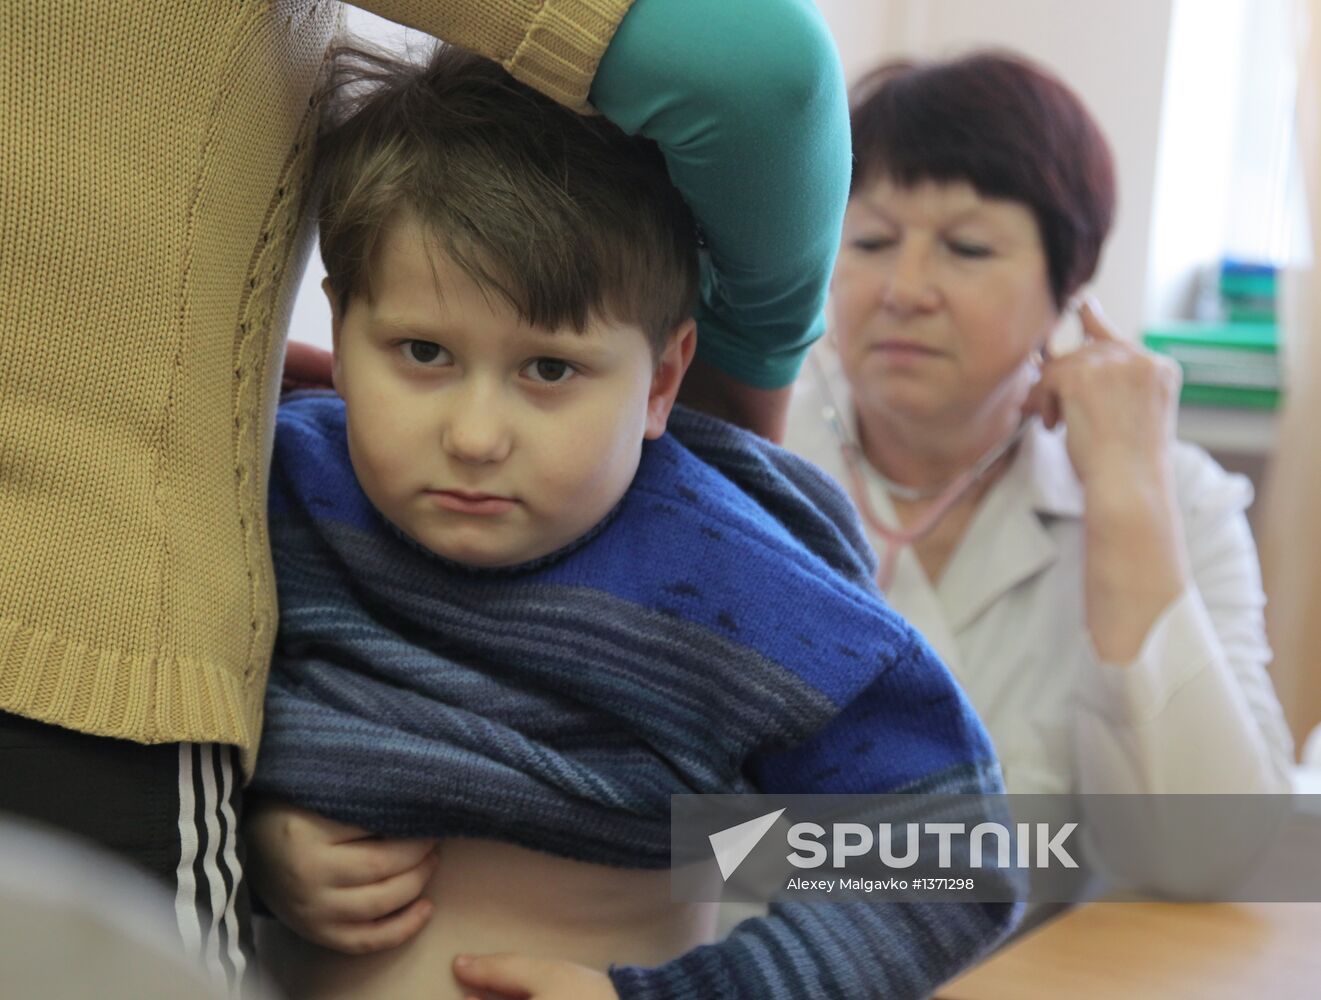 Work of Omsk children's polyclinic during flu epidemic